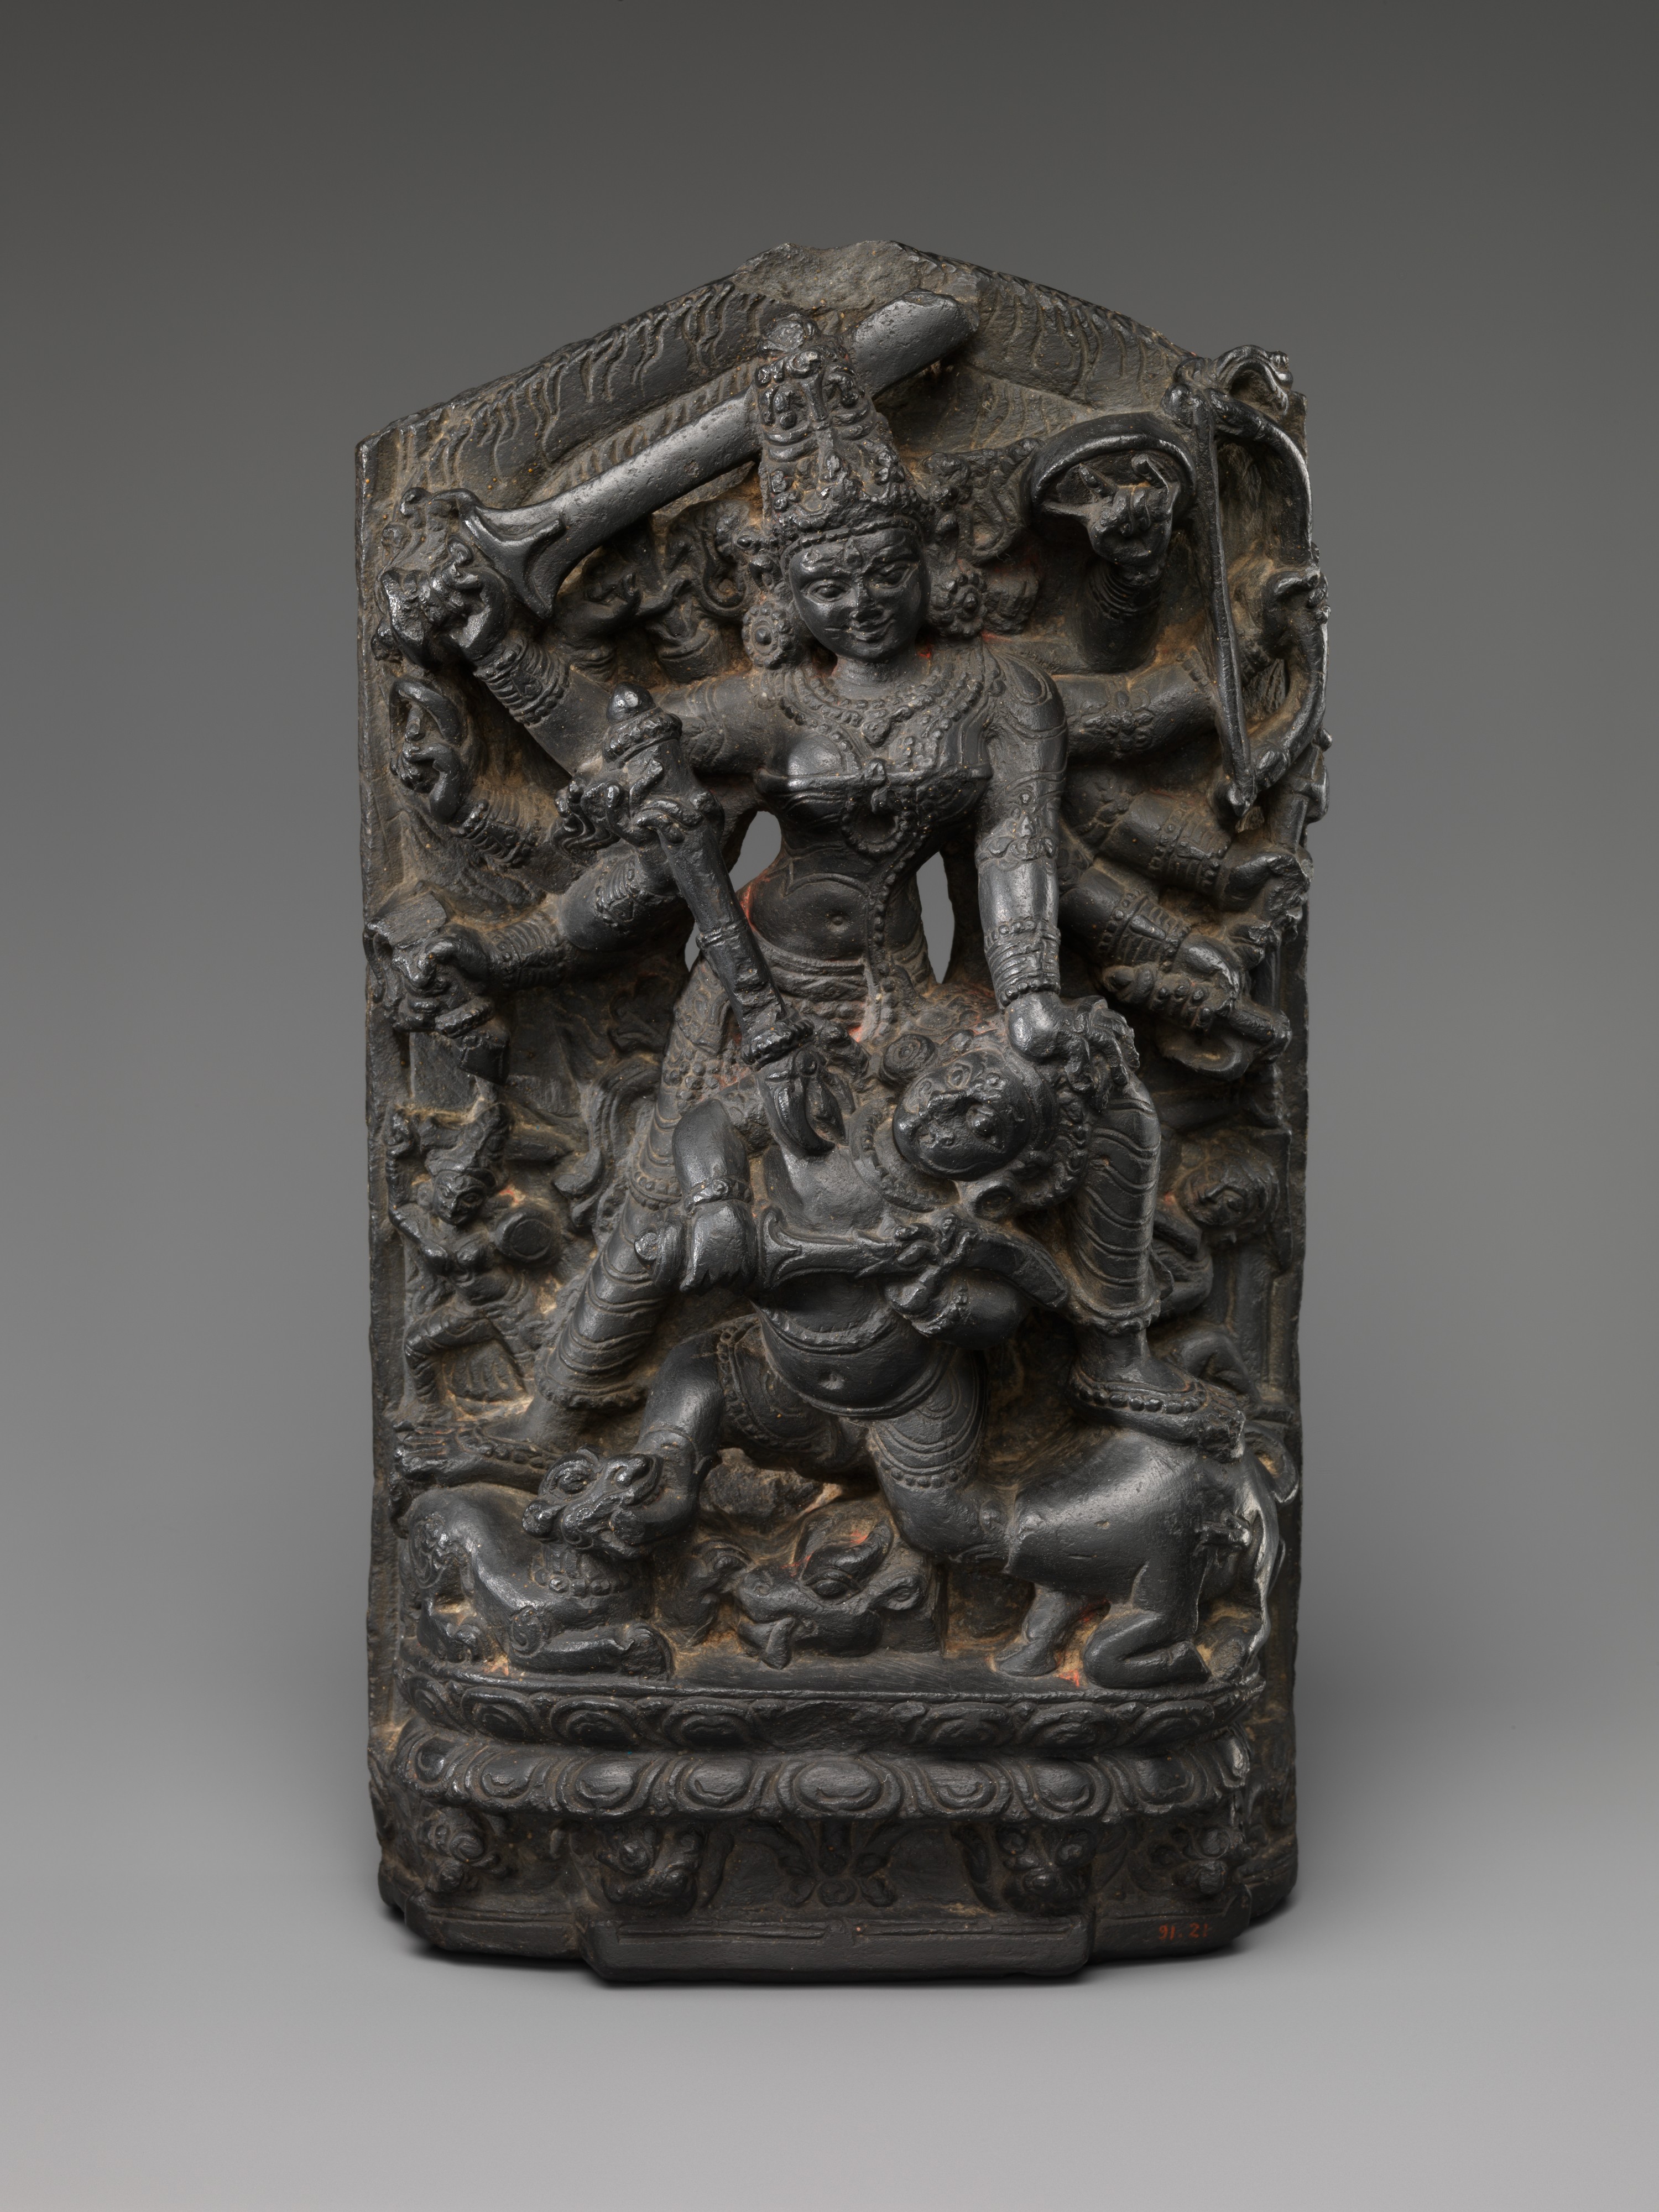 The Goddess Durga  Slaying the Buffalo Demon Mahishasura 